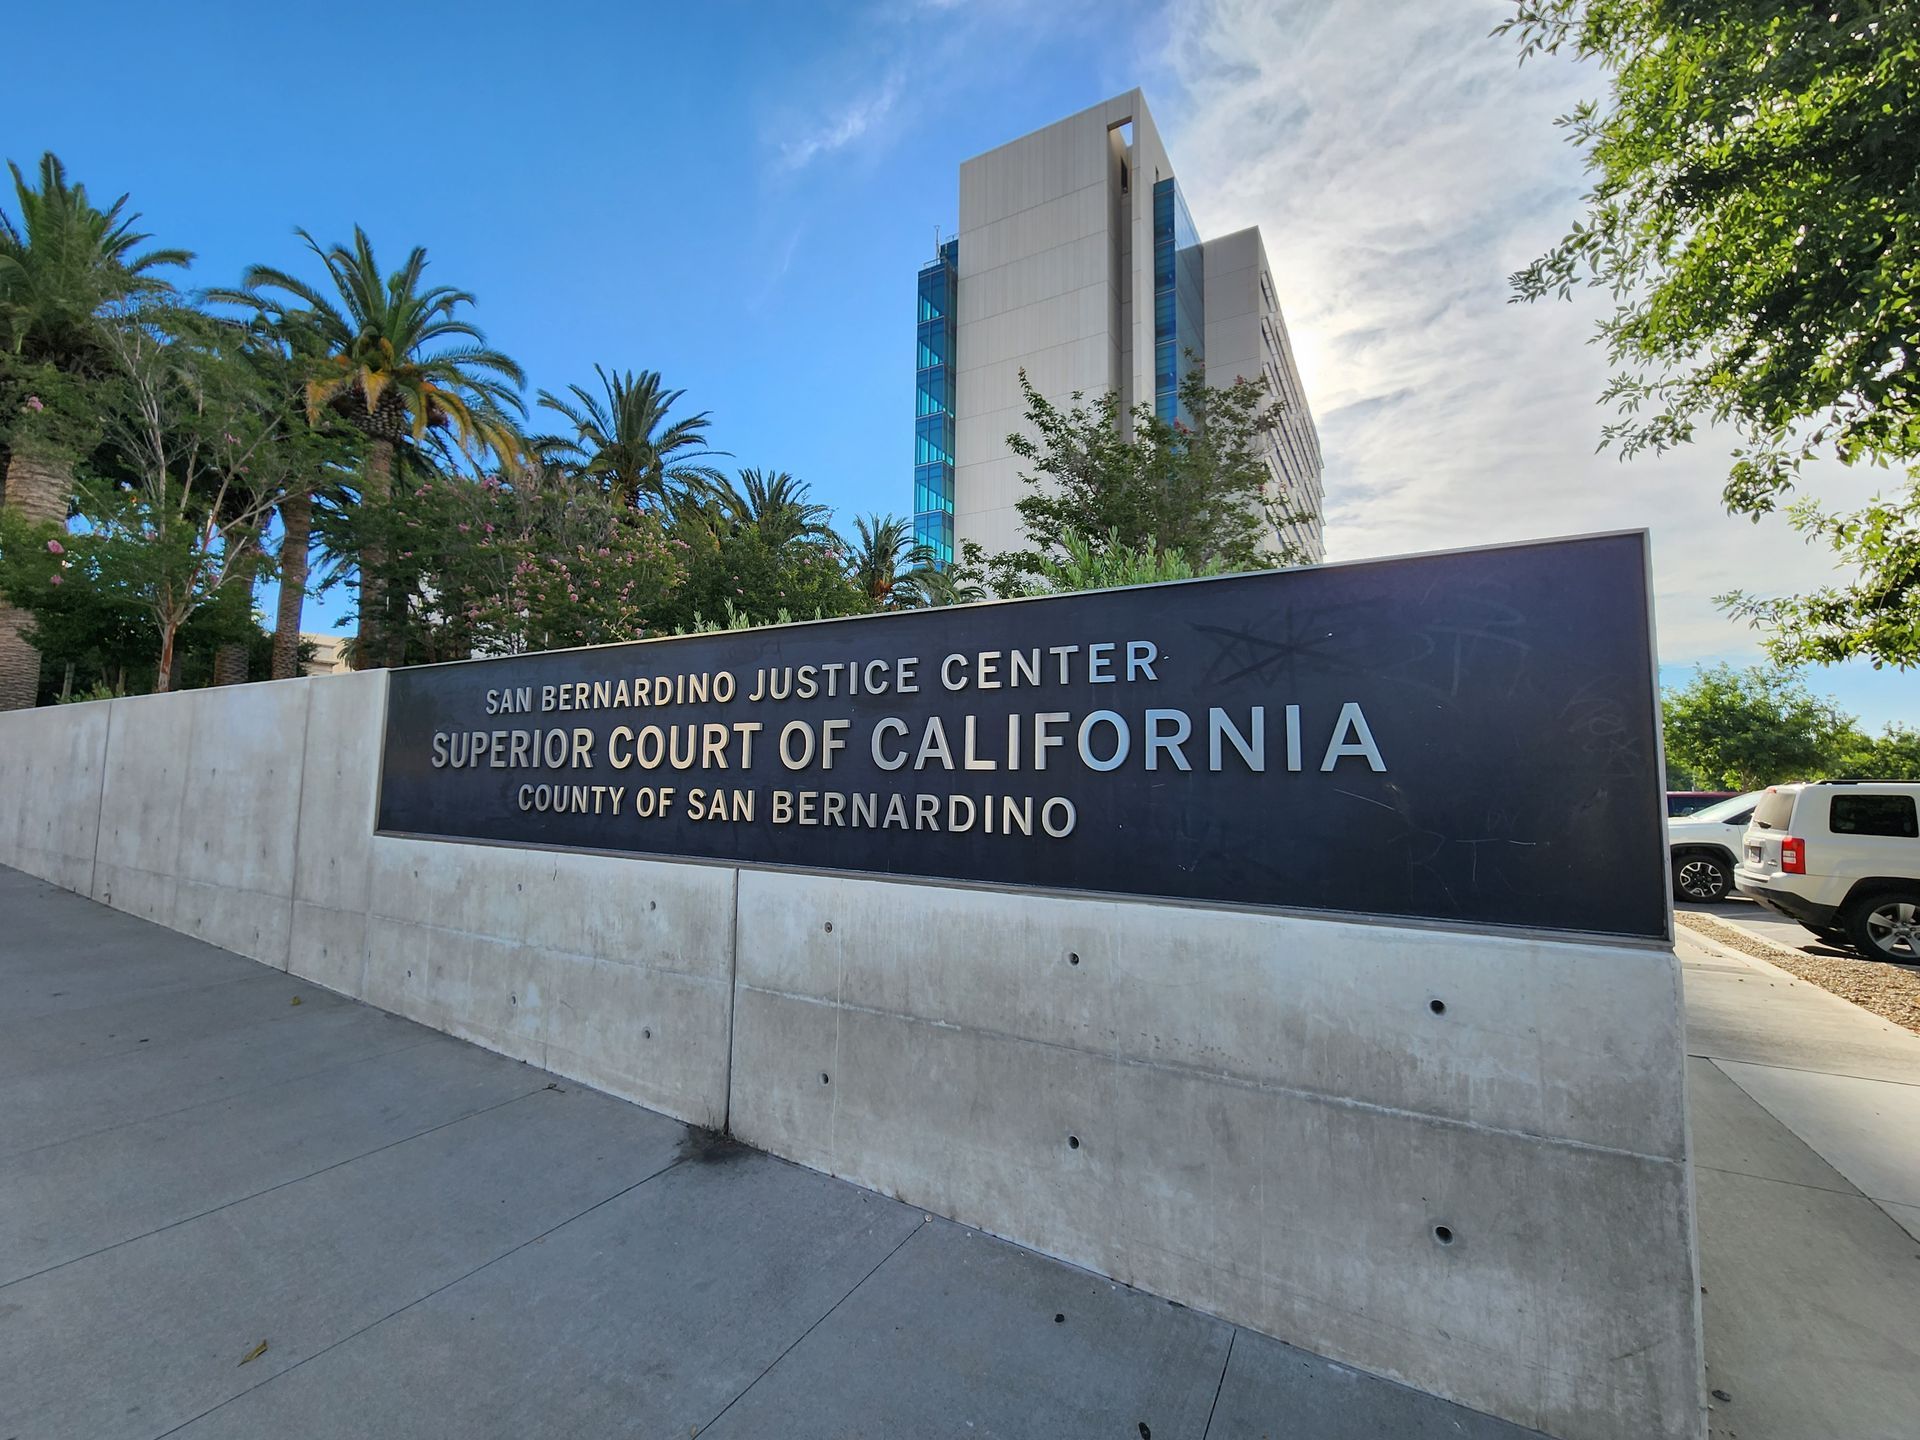 the superior court of California is located in san bernardino